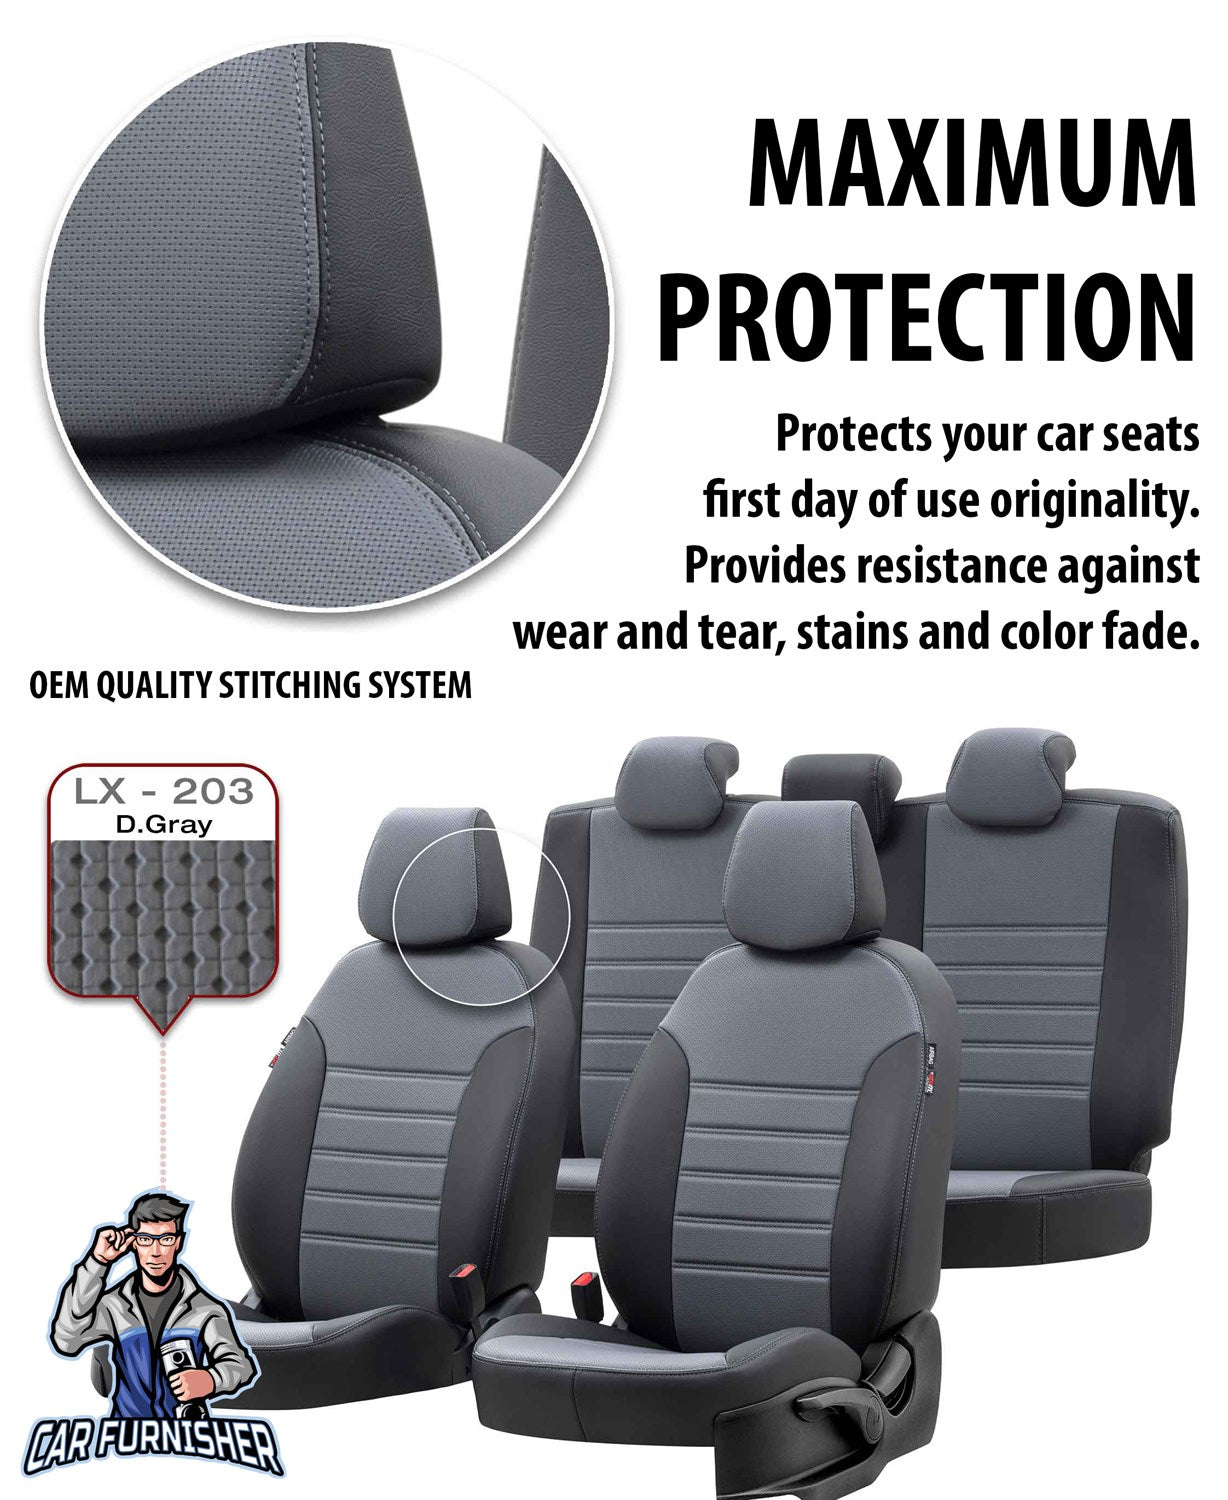 Honda CRV Seat Covers New York Leather Design Smoked Black Leather